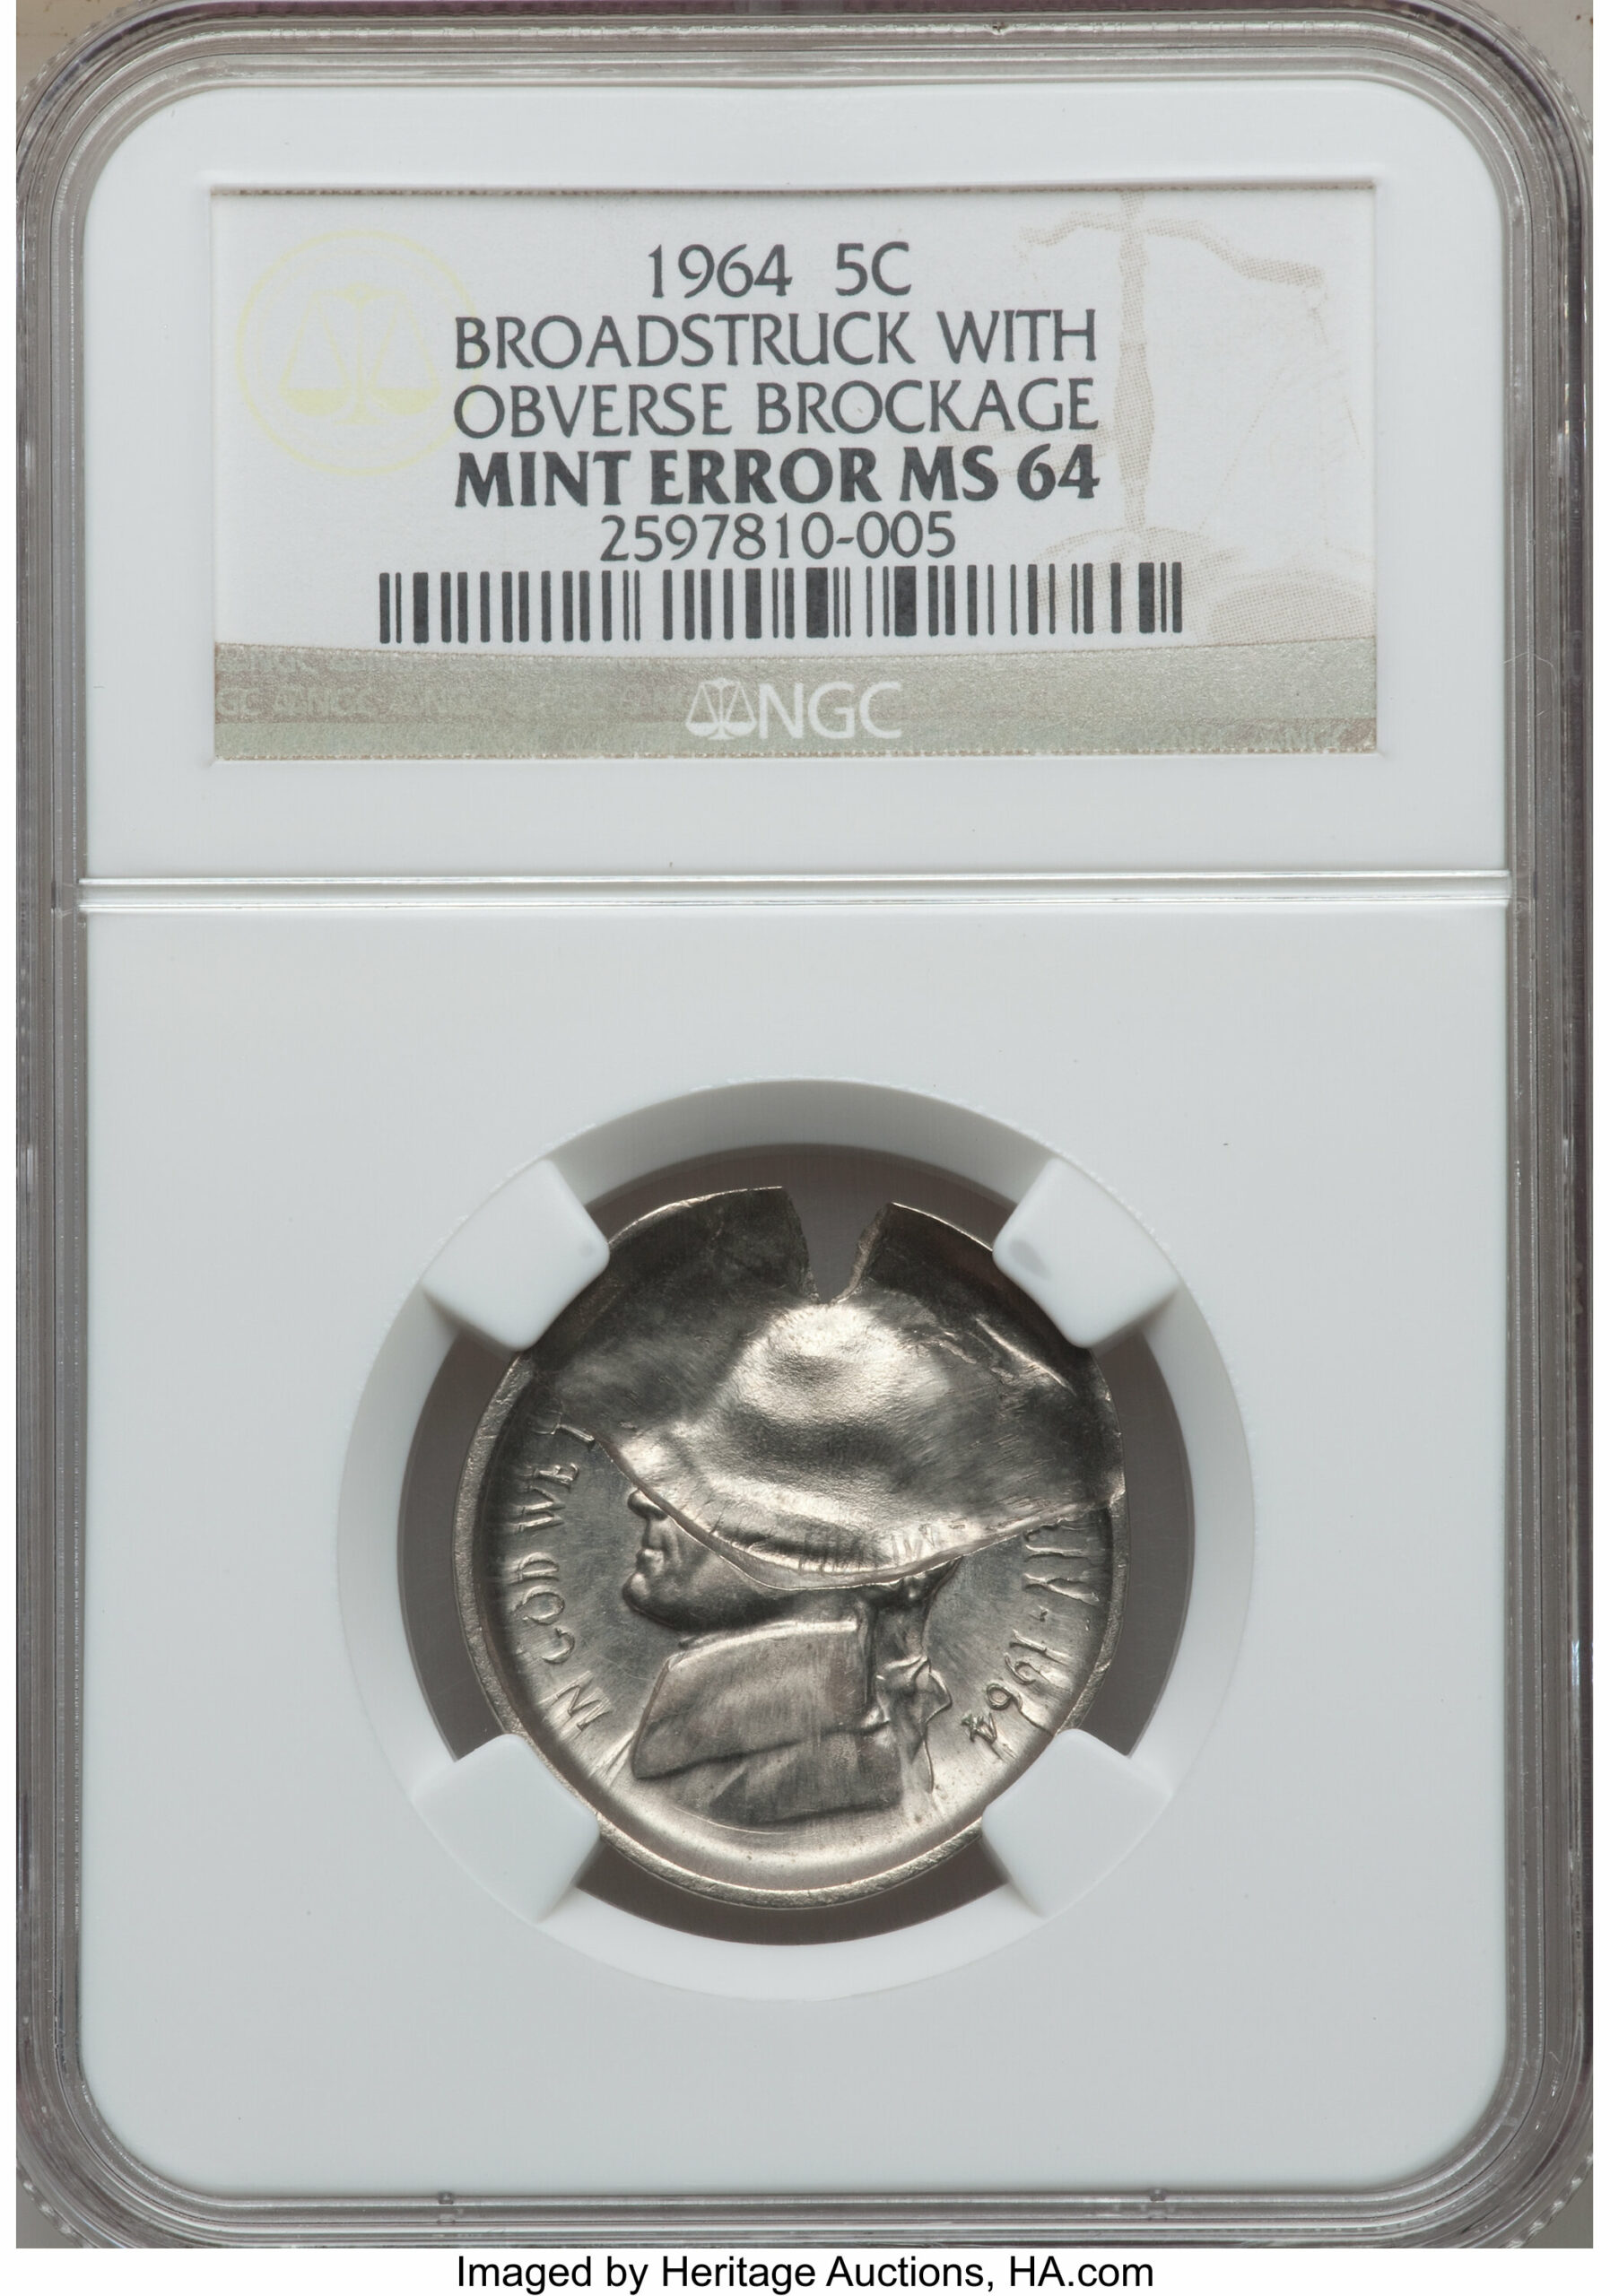 1964 "No Mint Mark" Nickel - Broadstuck with Obverse Brockage